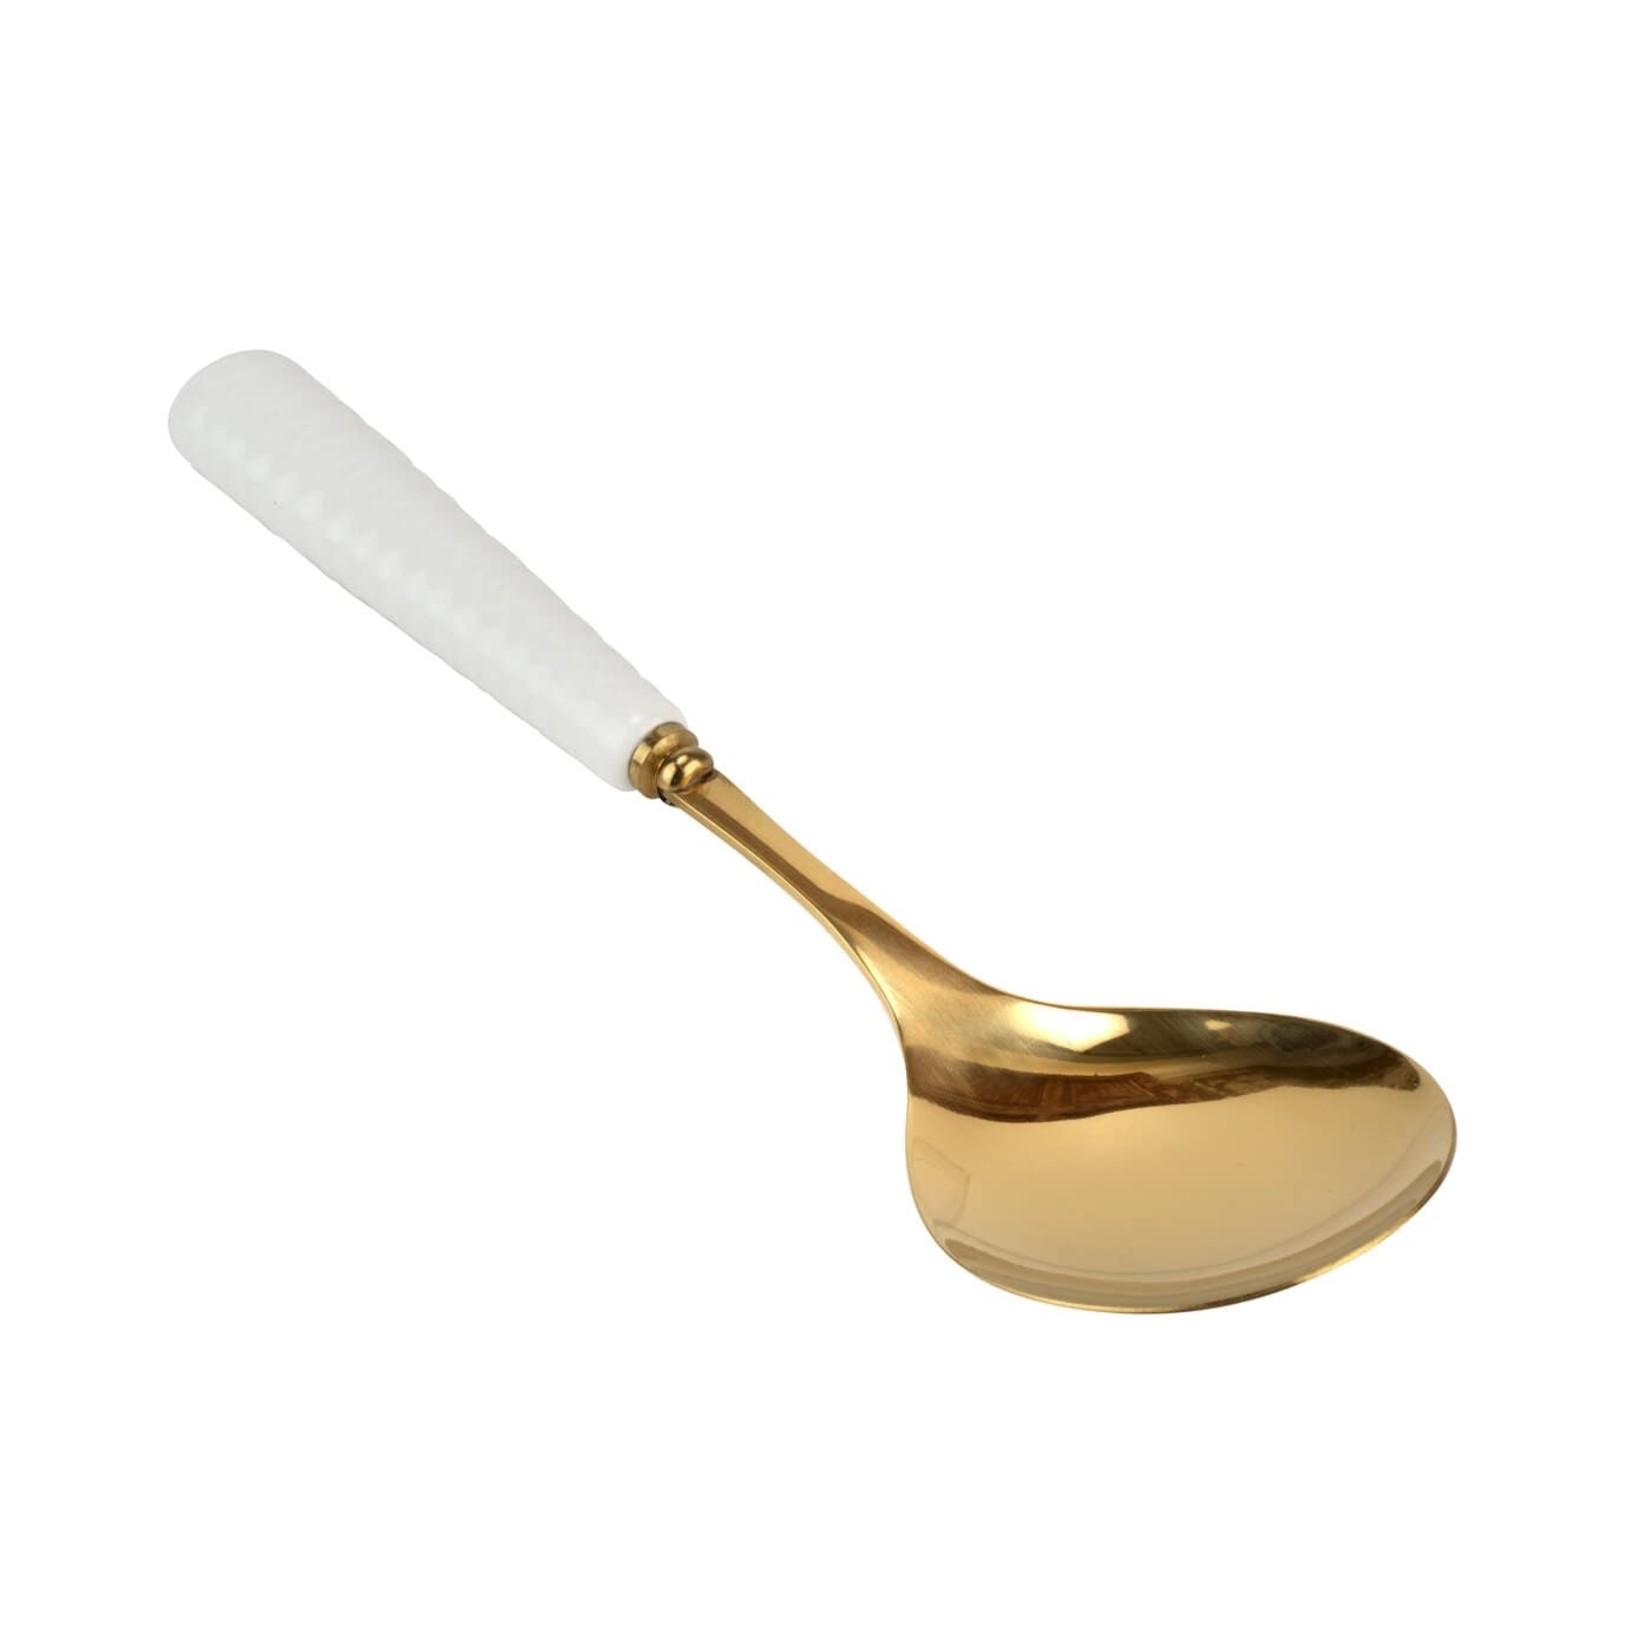 SOPHIE CONRAN SOPHIE CONRAN Serving Spoon - White / Gold